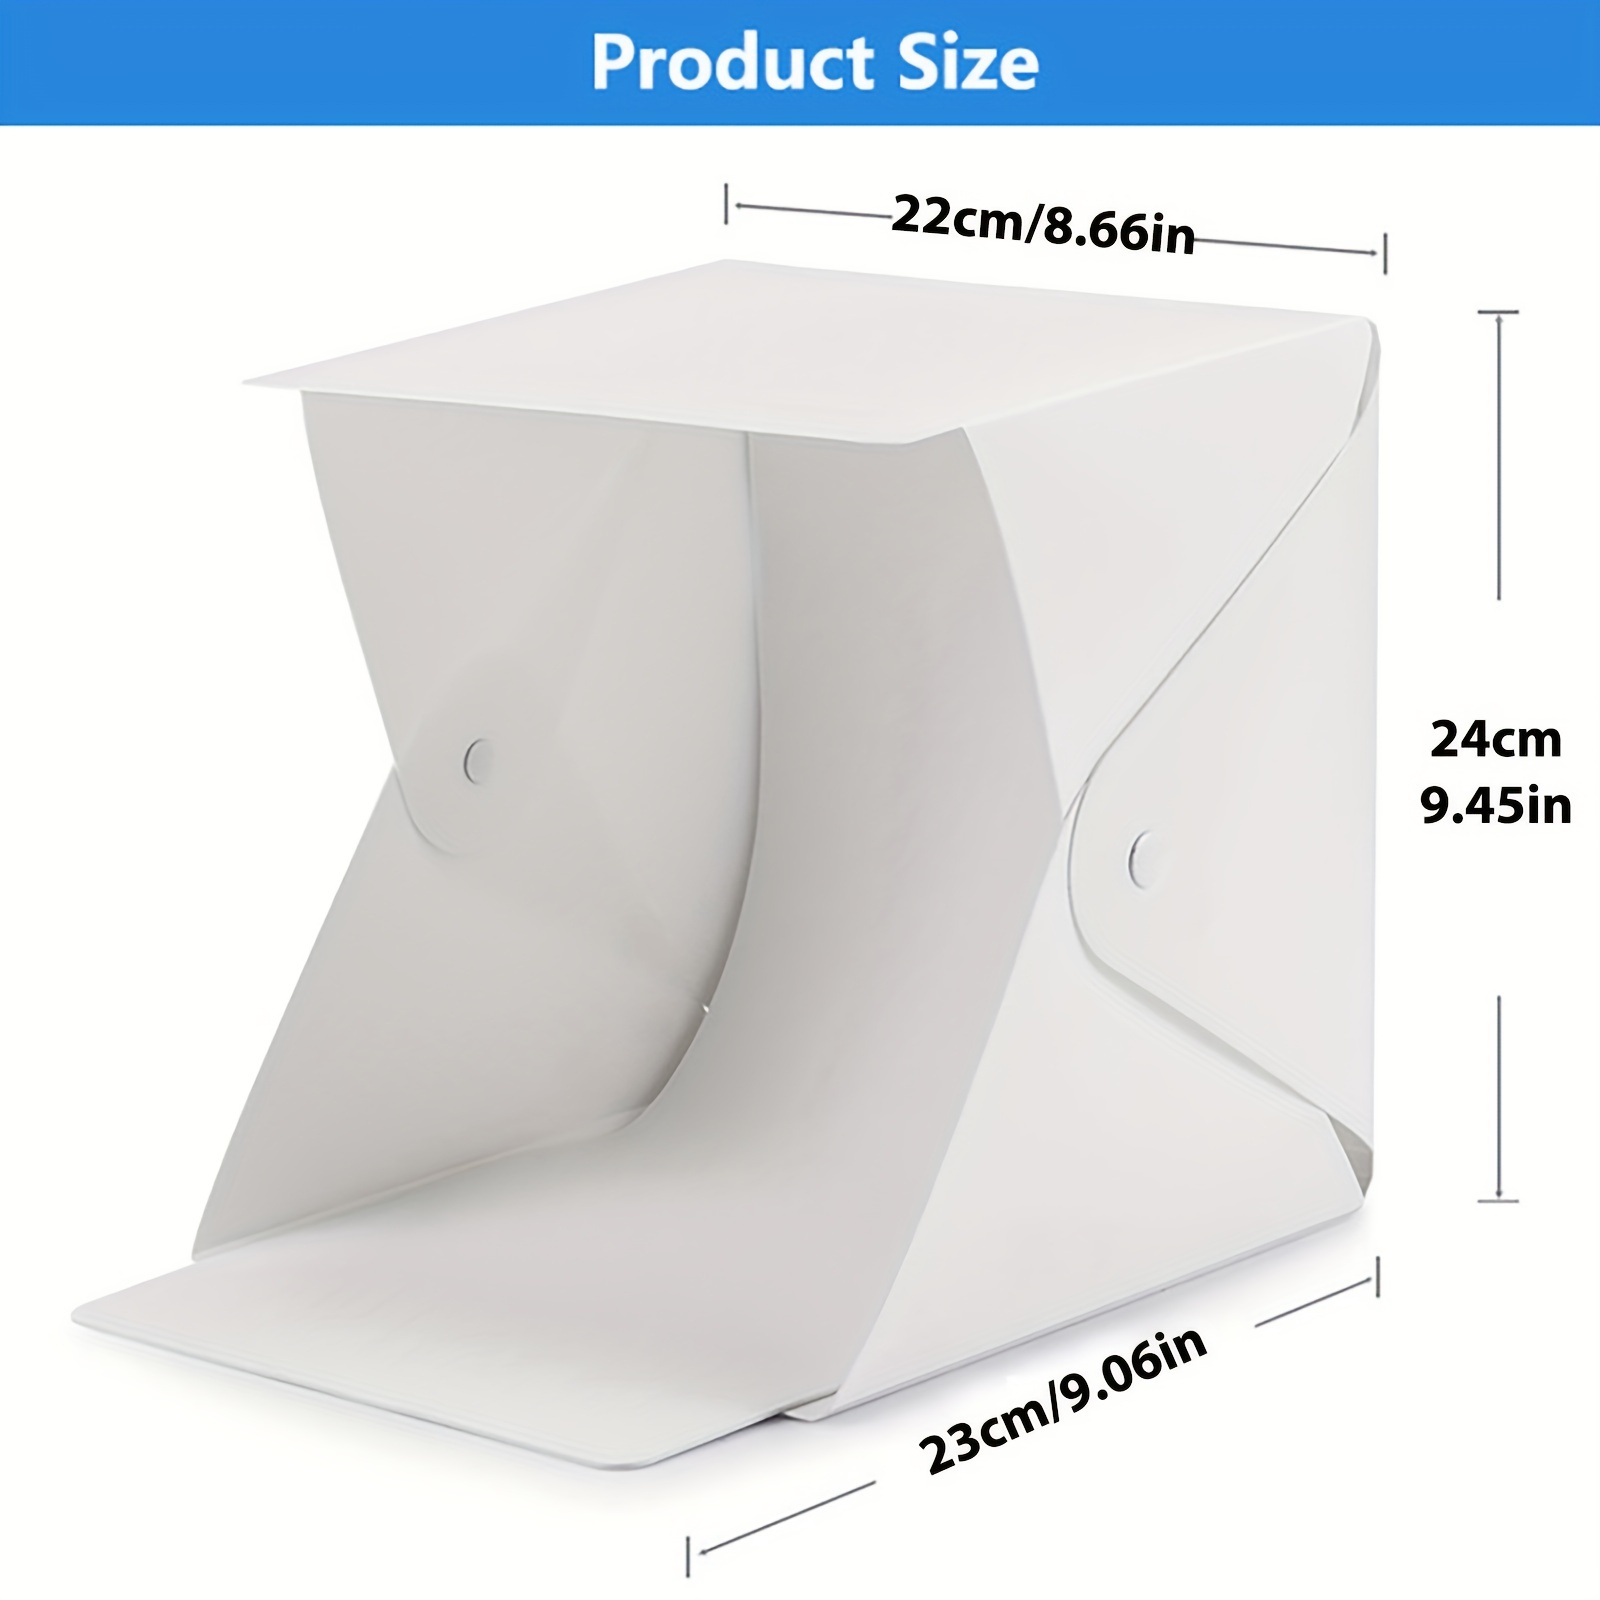 Product Photography Light Box, Portable Photo Studio Light Tent Kit,  Foldable Mini Photography Light Box Tent with 4 Colors Backgrounds (Black,  White